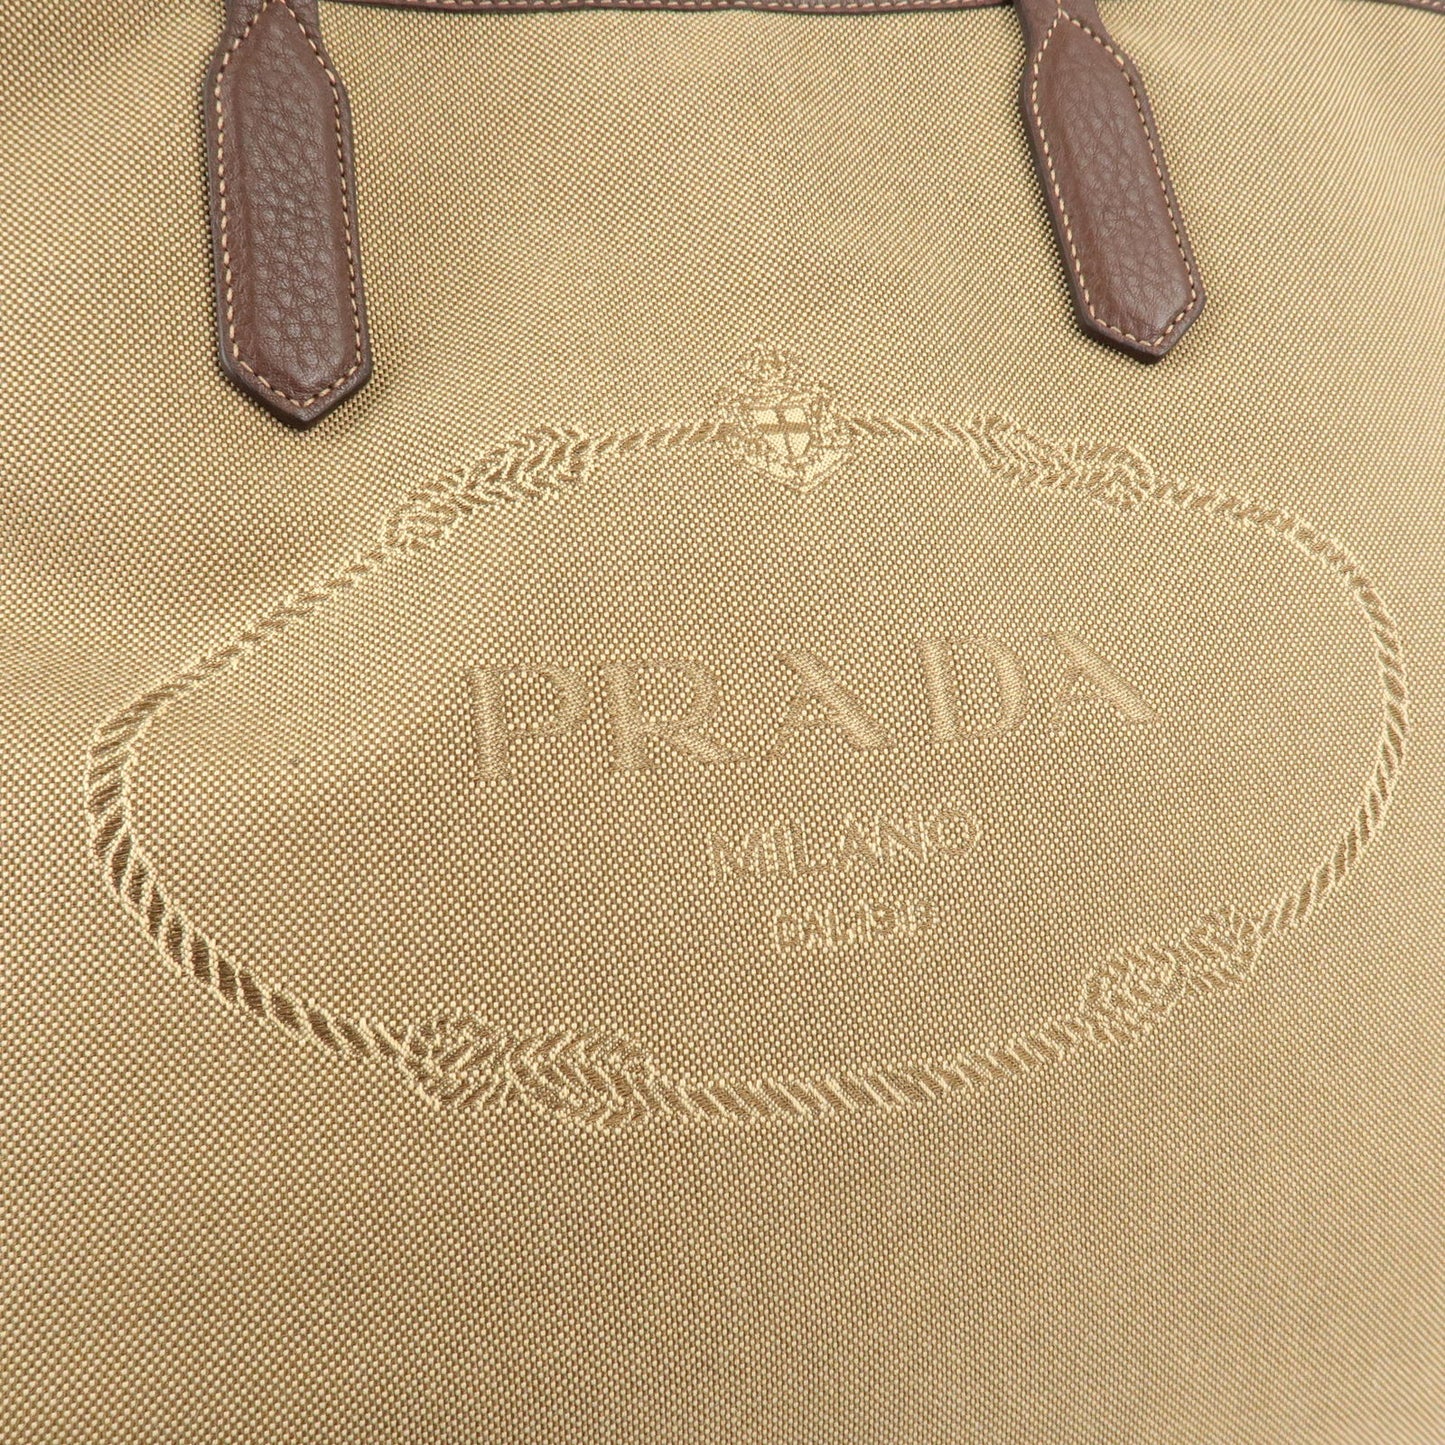 PRADA Logo Jacquard Leather Tote Bag Hand Bag Beige Brown